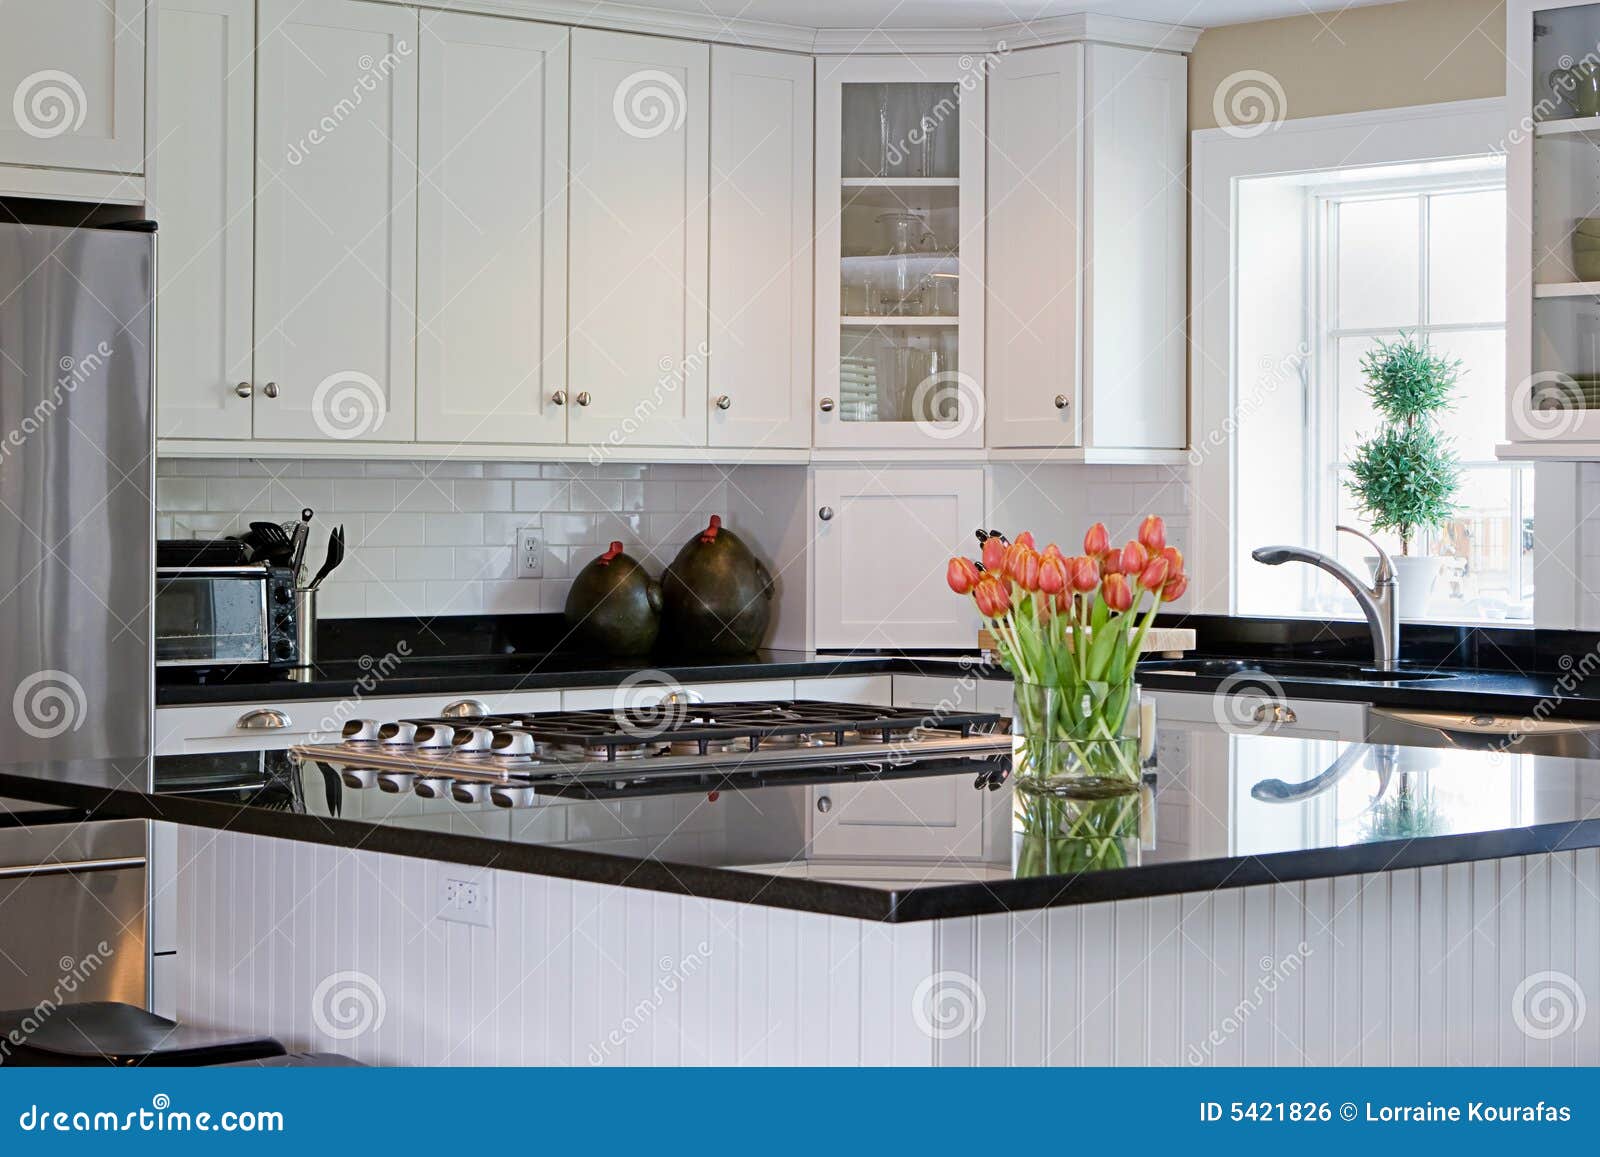 Interior kitchen stock photo. Image of granite, decoration - 5421826